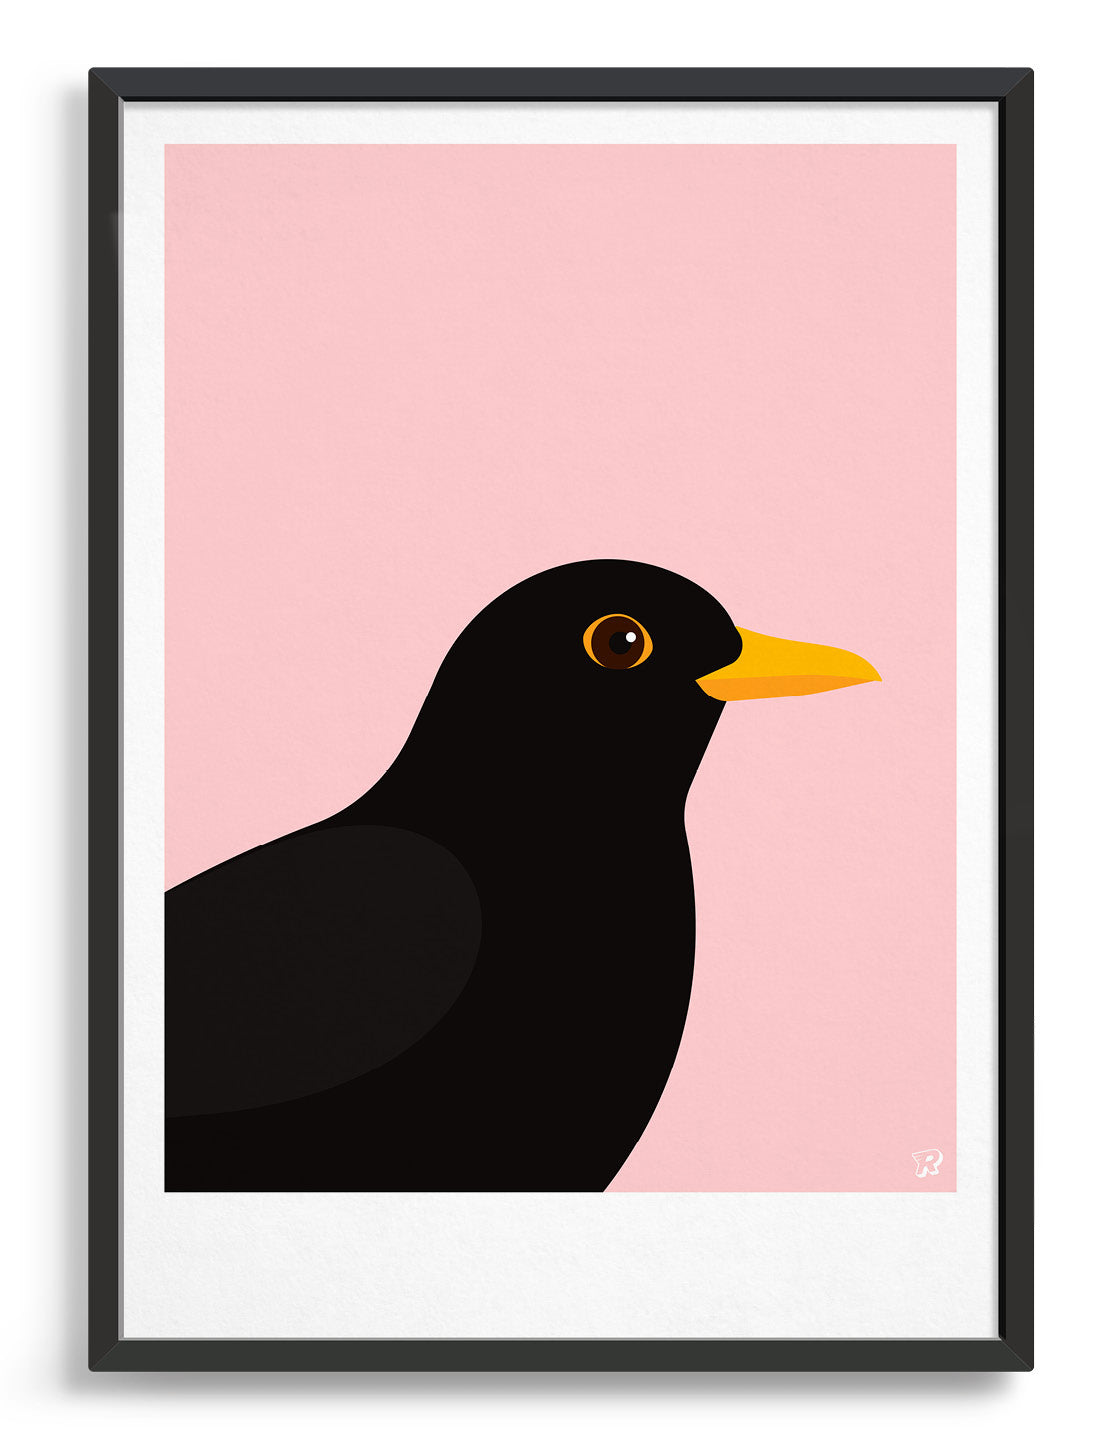 modern Blackbird illustration against a pink background